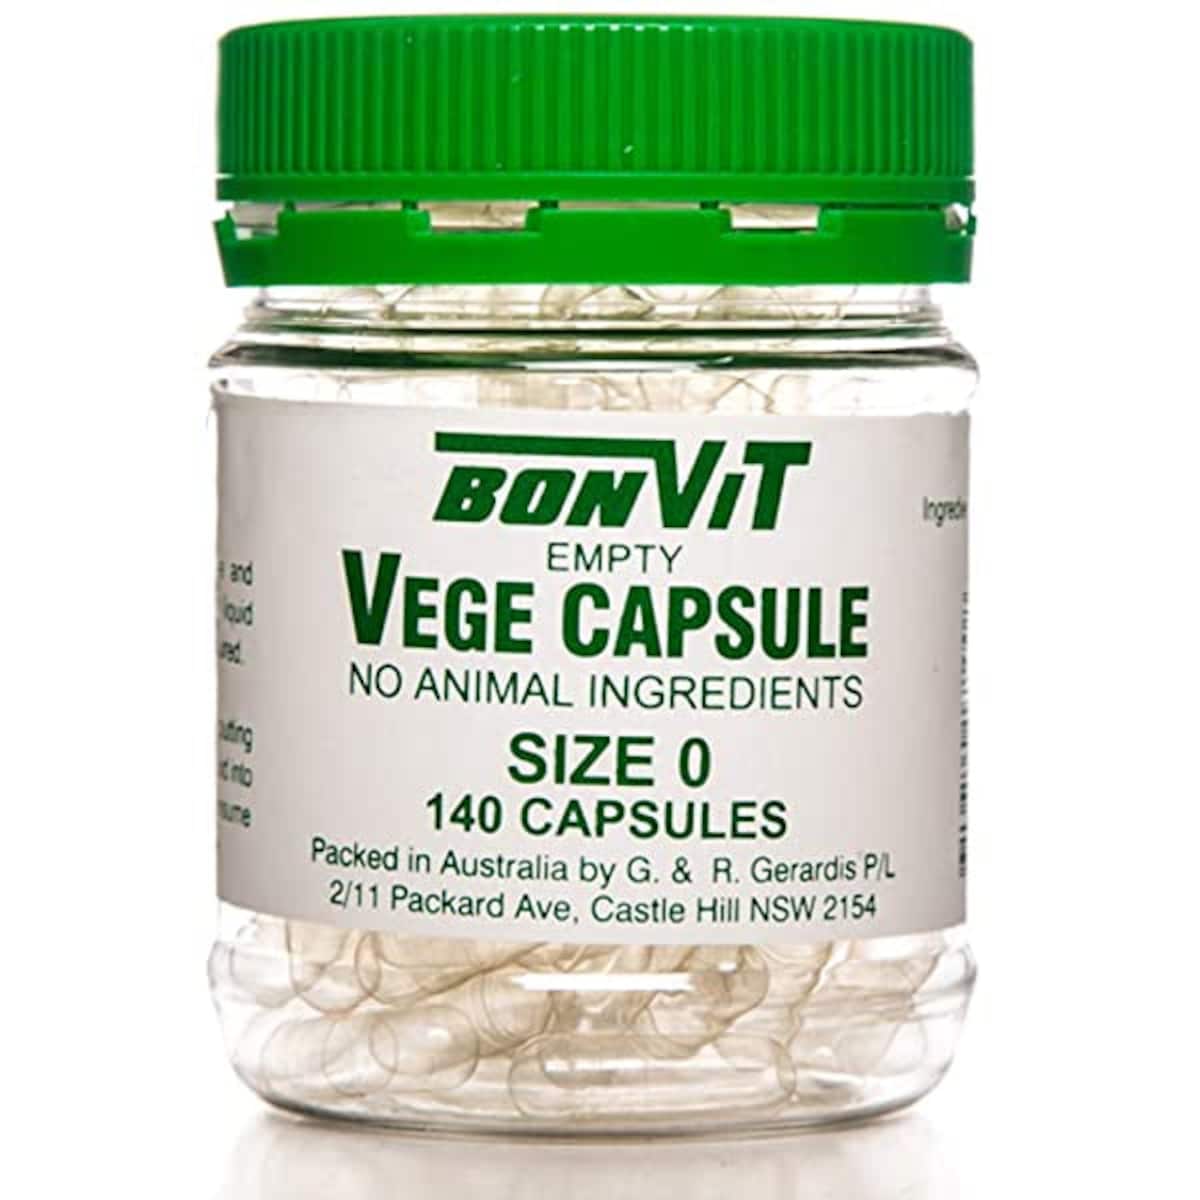 Bonvit Empty Vege Capsules 0 size 140c